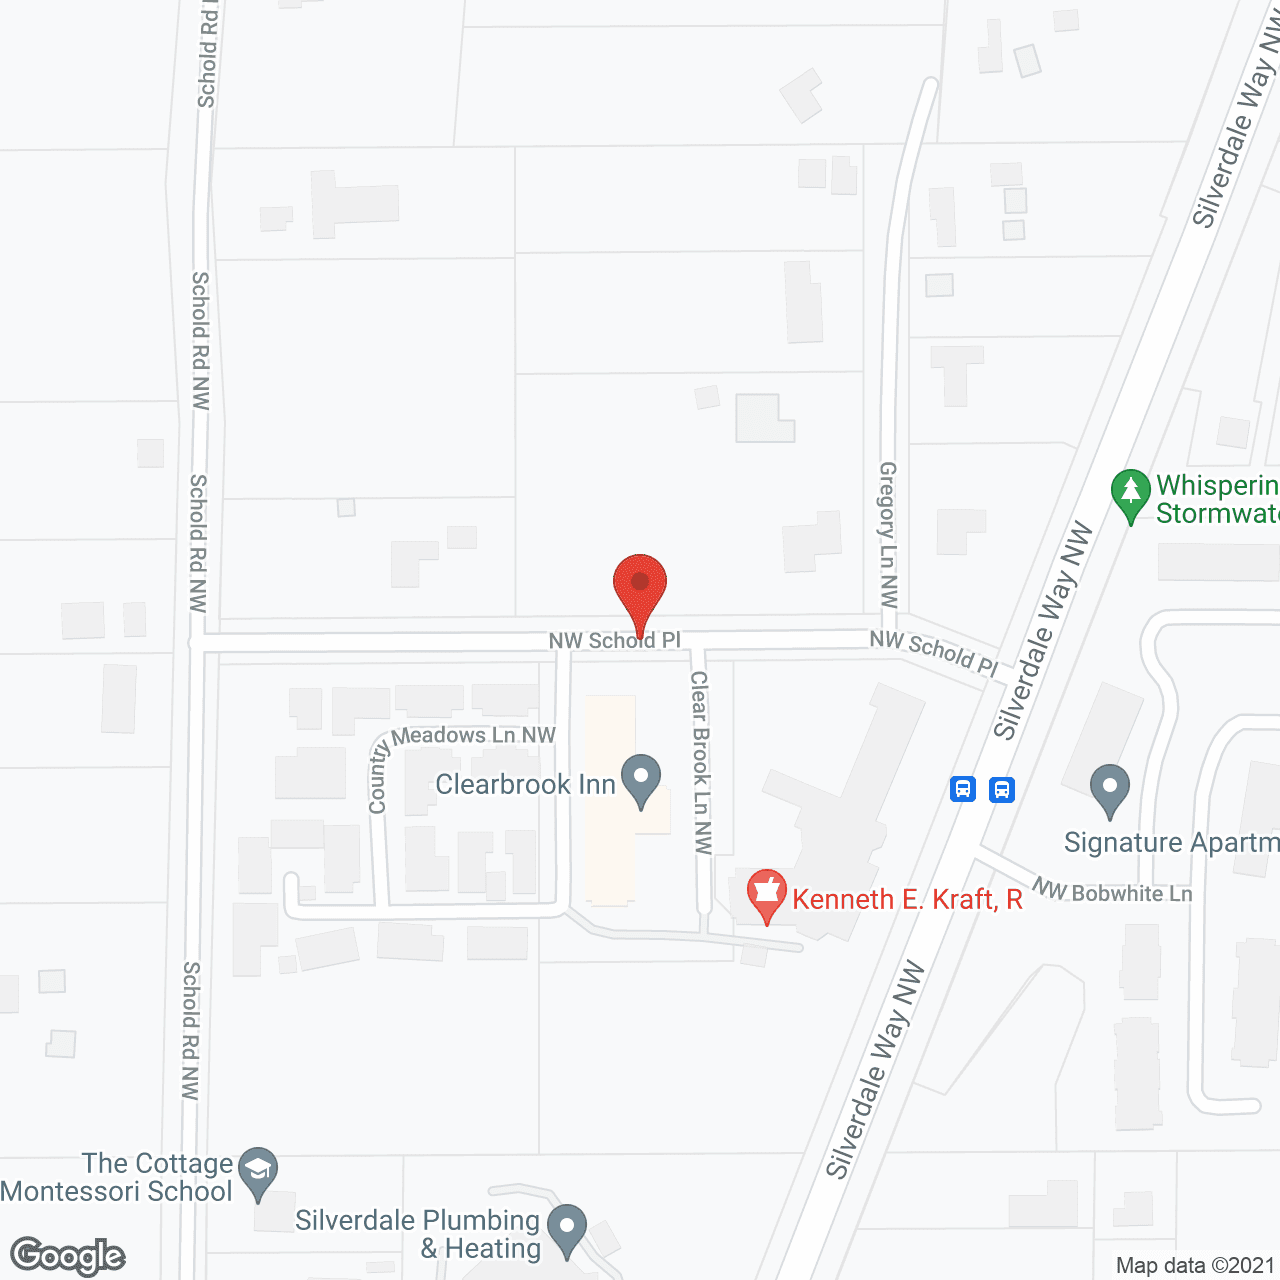 Clearbrook Inn in google map